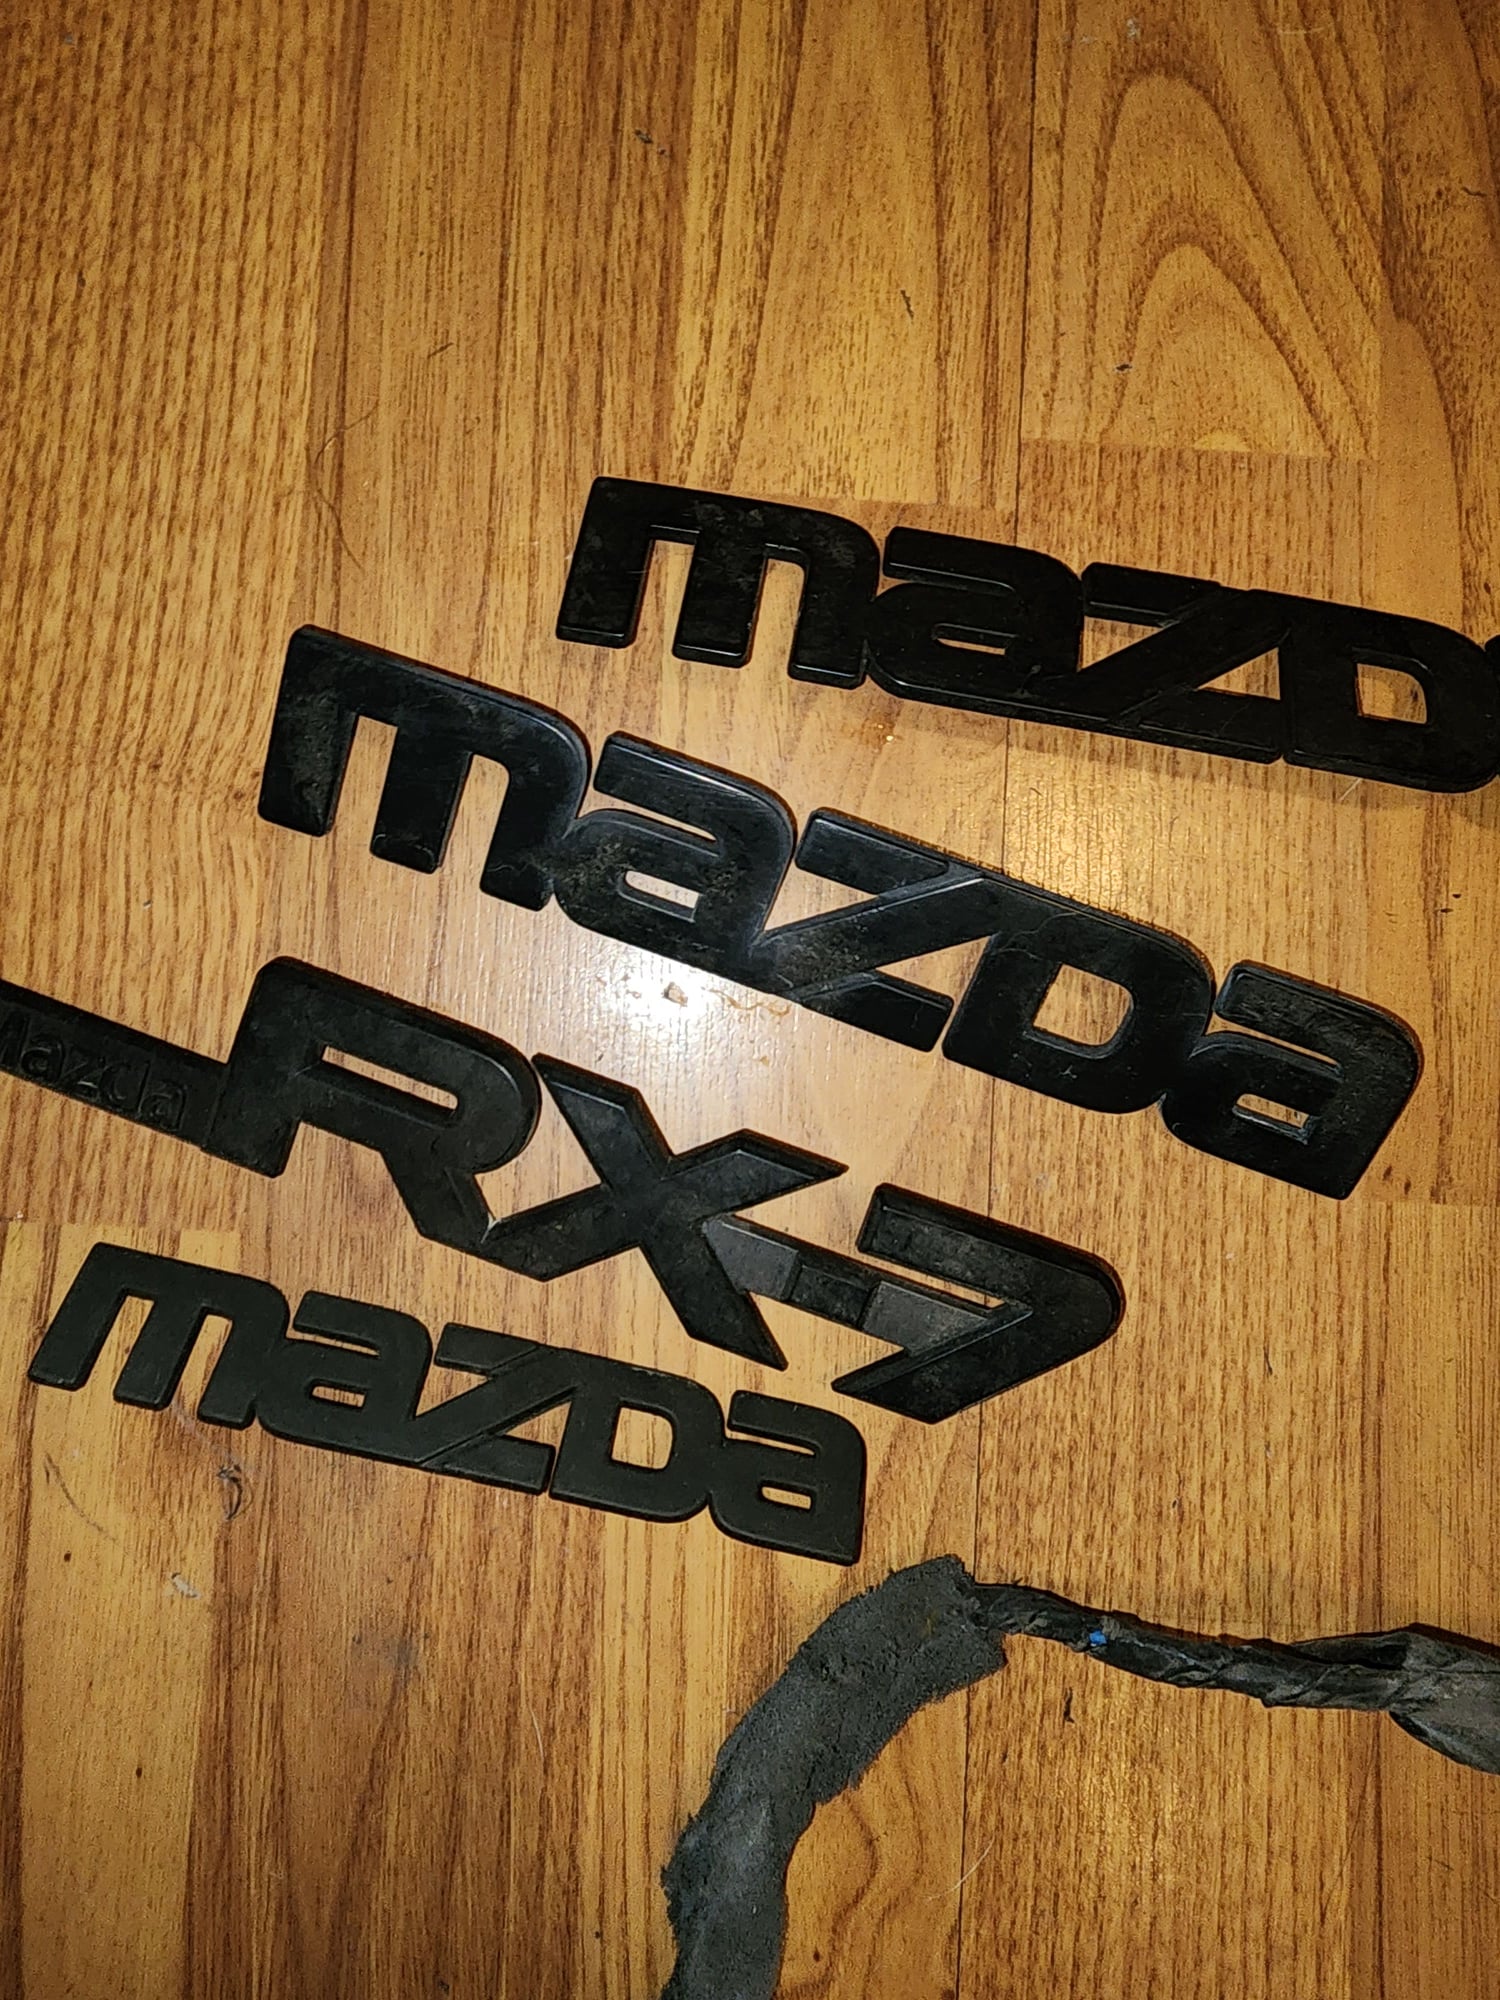 Accessories - Mazda rx7 fc parts - Used - 1986 to 1991 Mazda RX-7 - Brigham City, UT 84302, United States